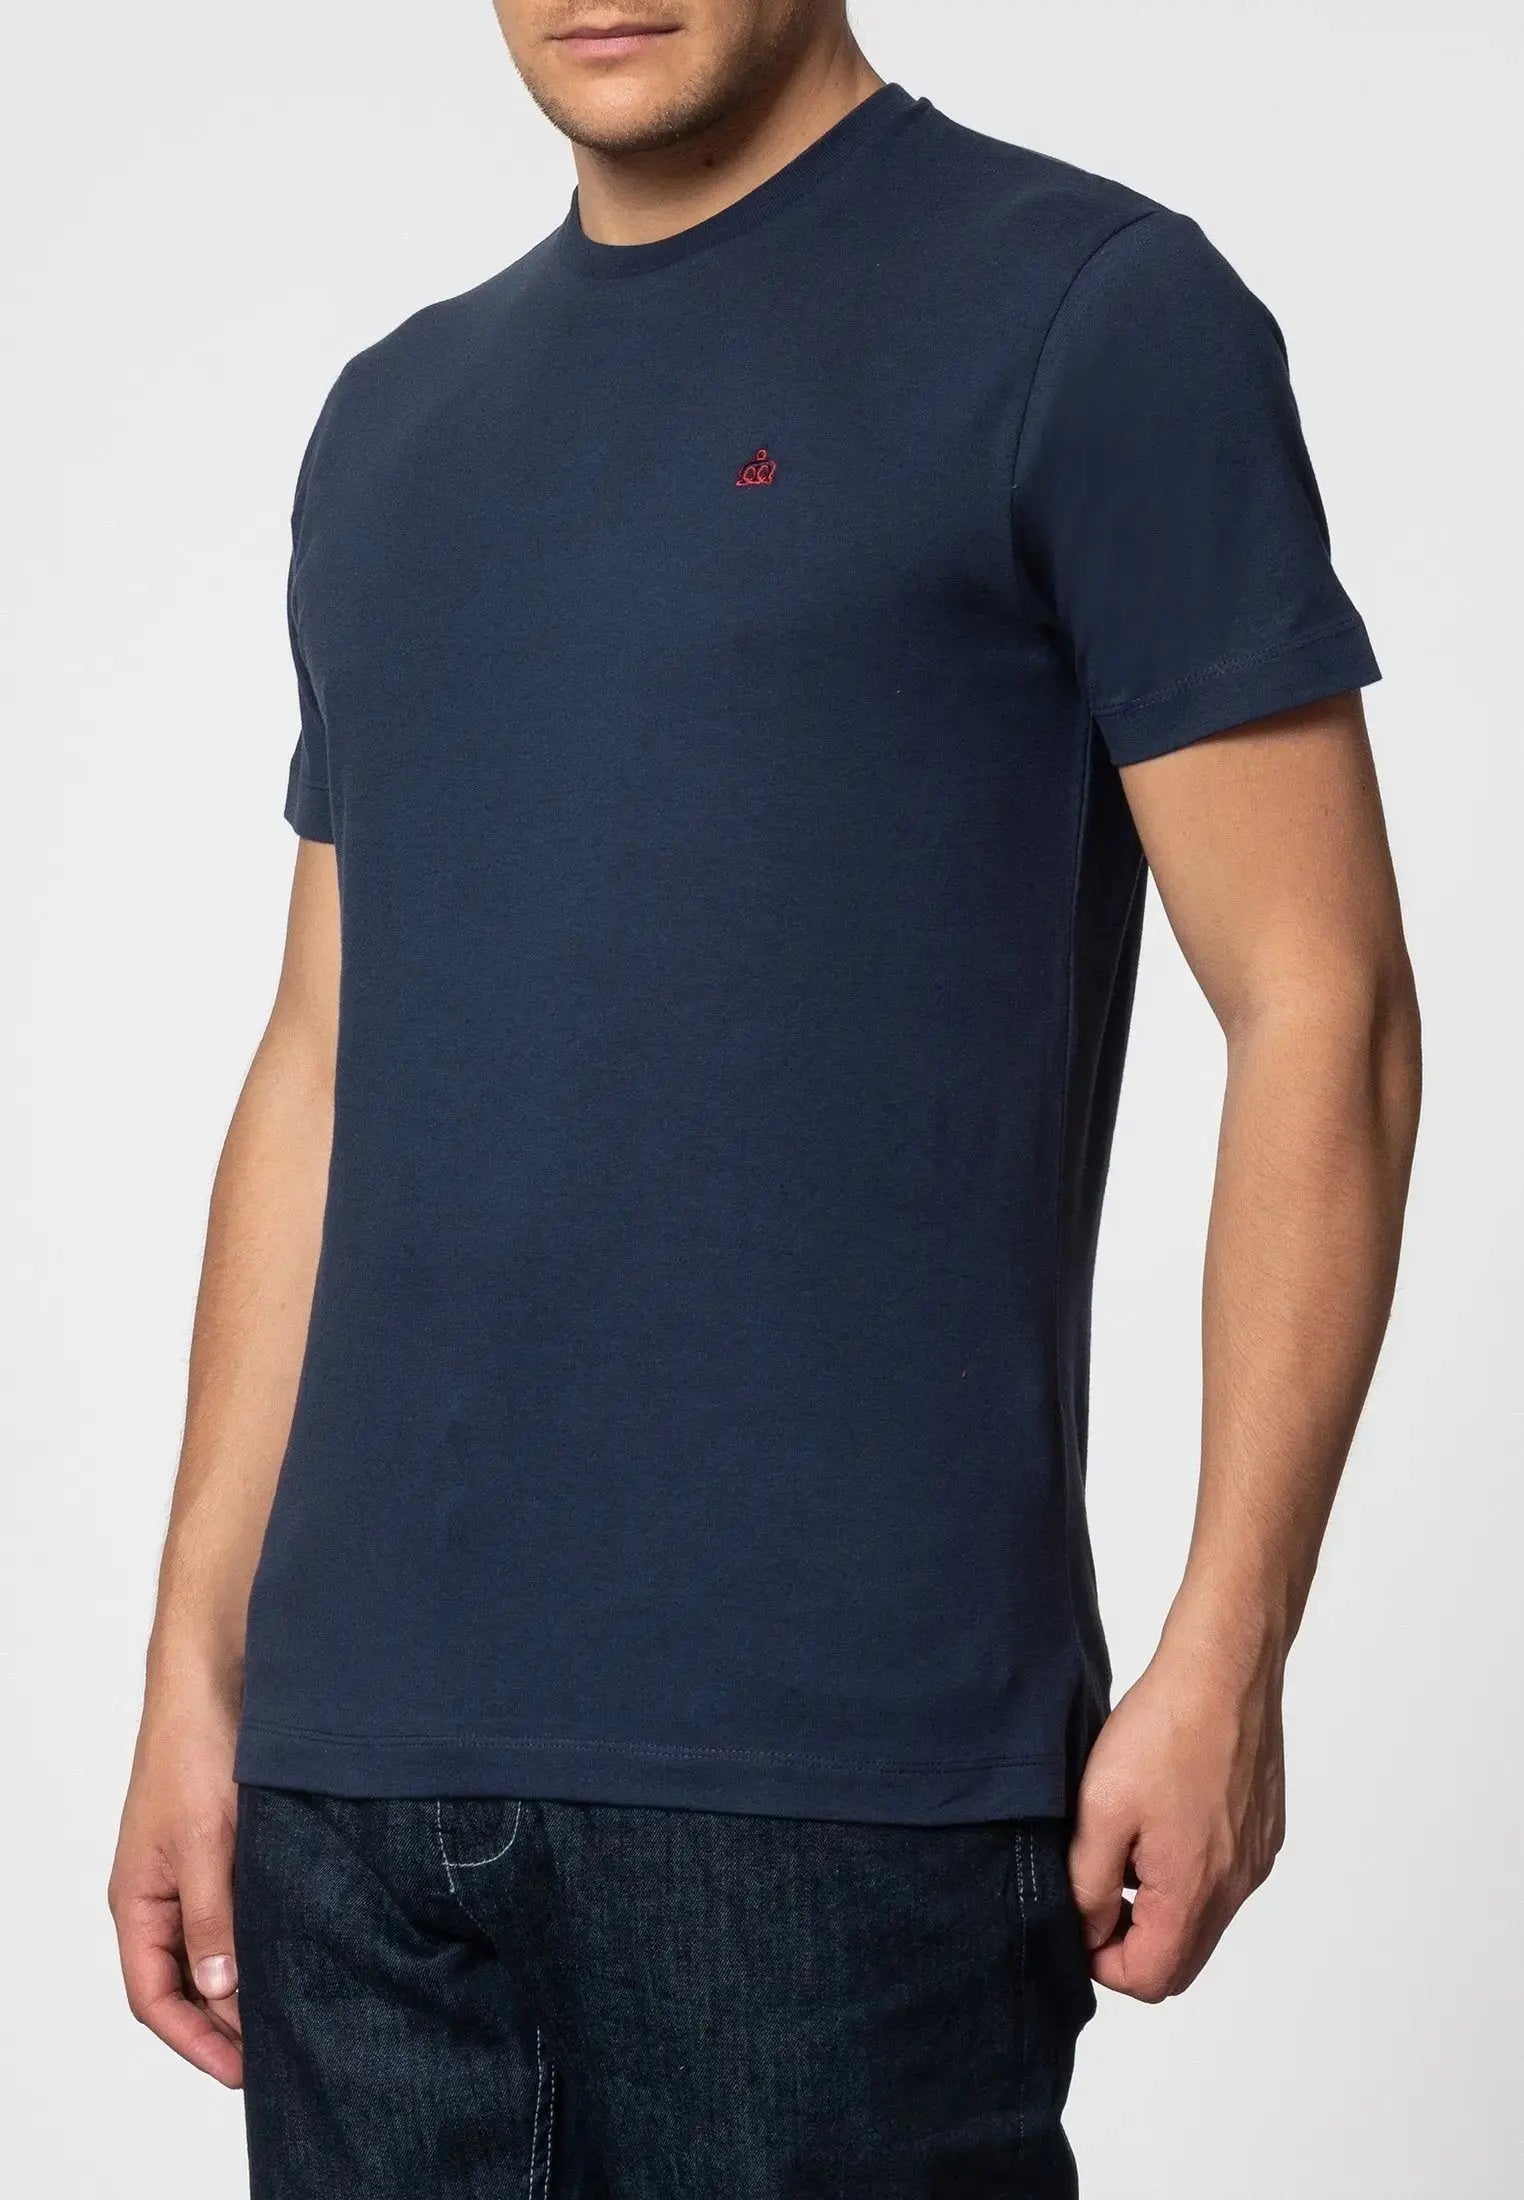 Merc London Keyport T-Shirt - Navy From Woven Durham